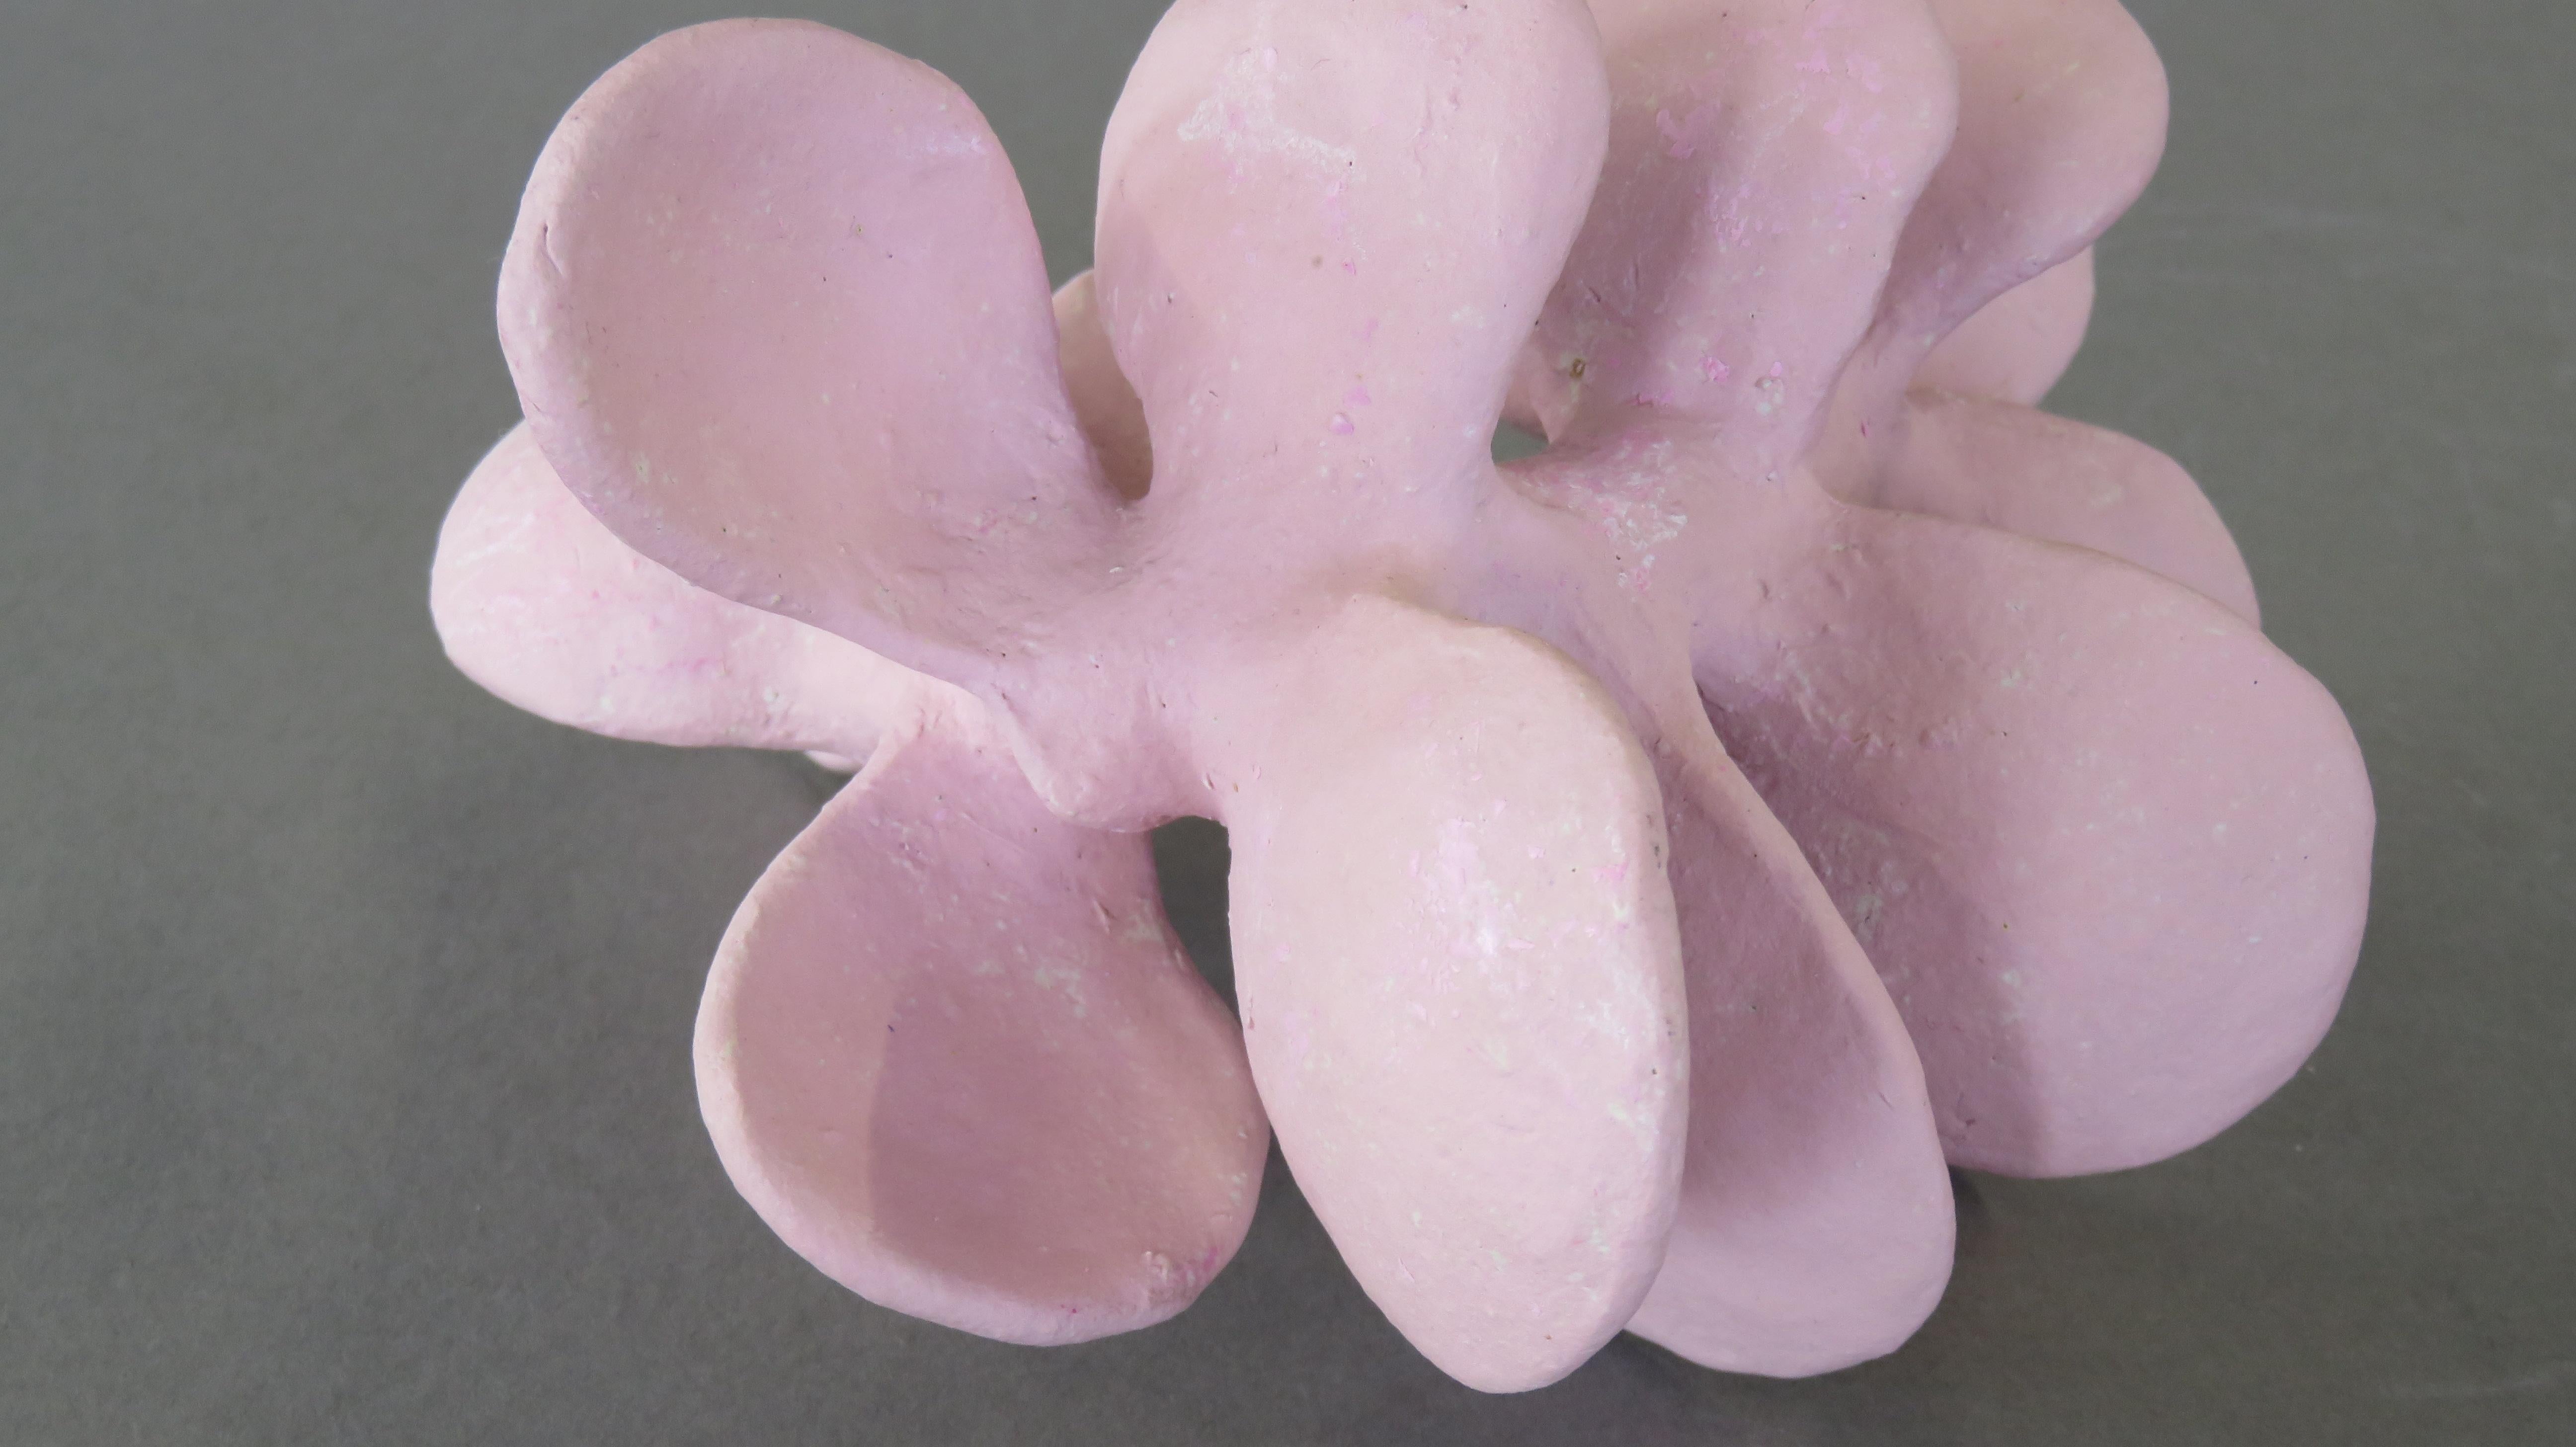 Handbuilt Ceramic Sculpture in Pink, A Flower-Like Vertebrae With Petals 1